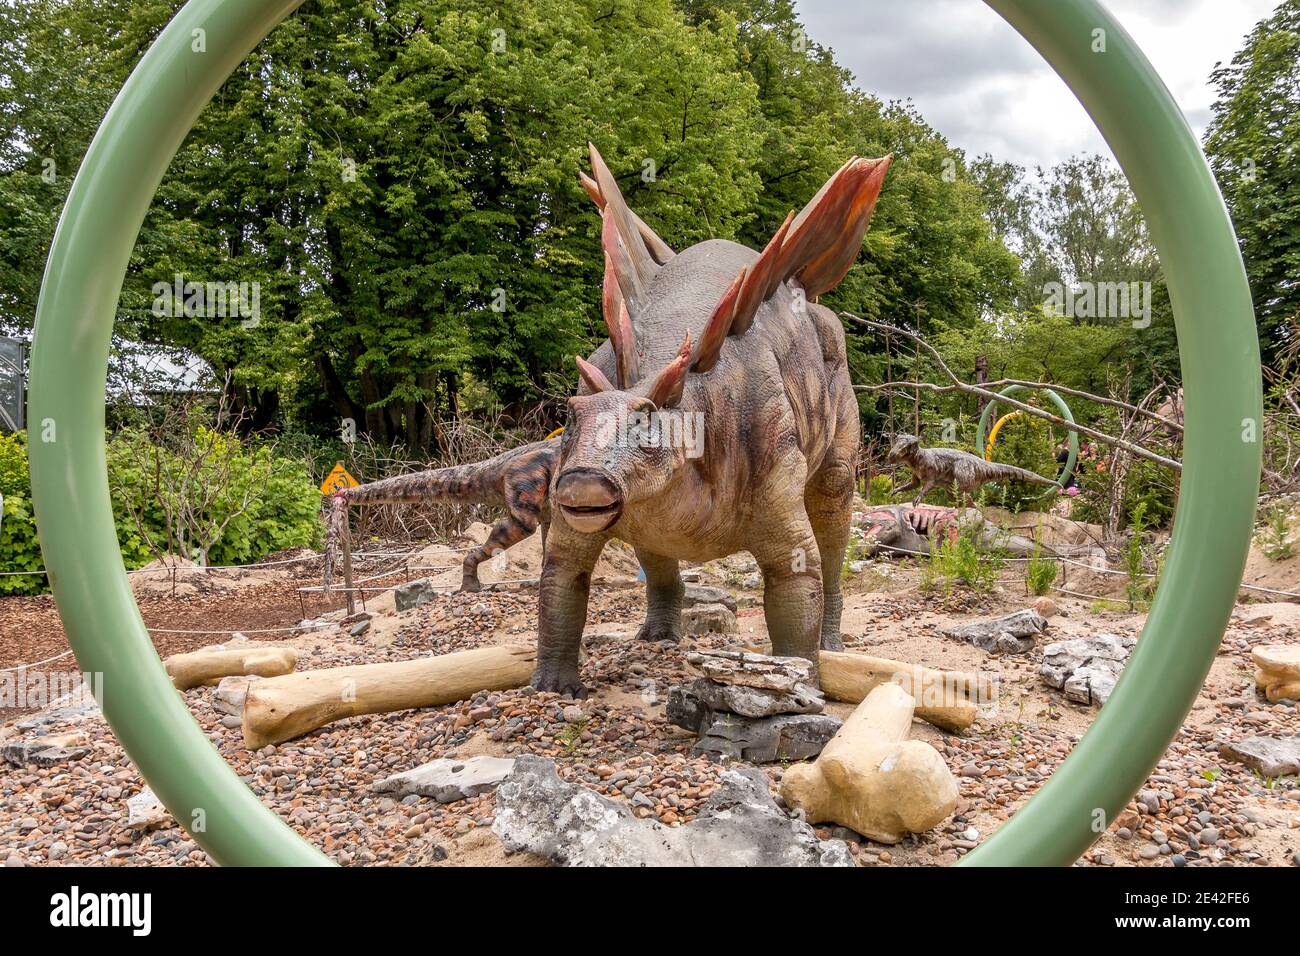 Aalborg, Denmark - 25 Jul 2020: Dinosaur stegosaurus in natural and in lifelike size Photo - Alamy